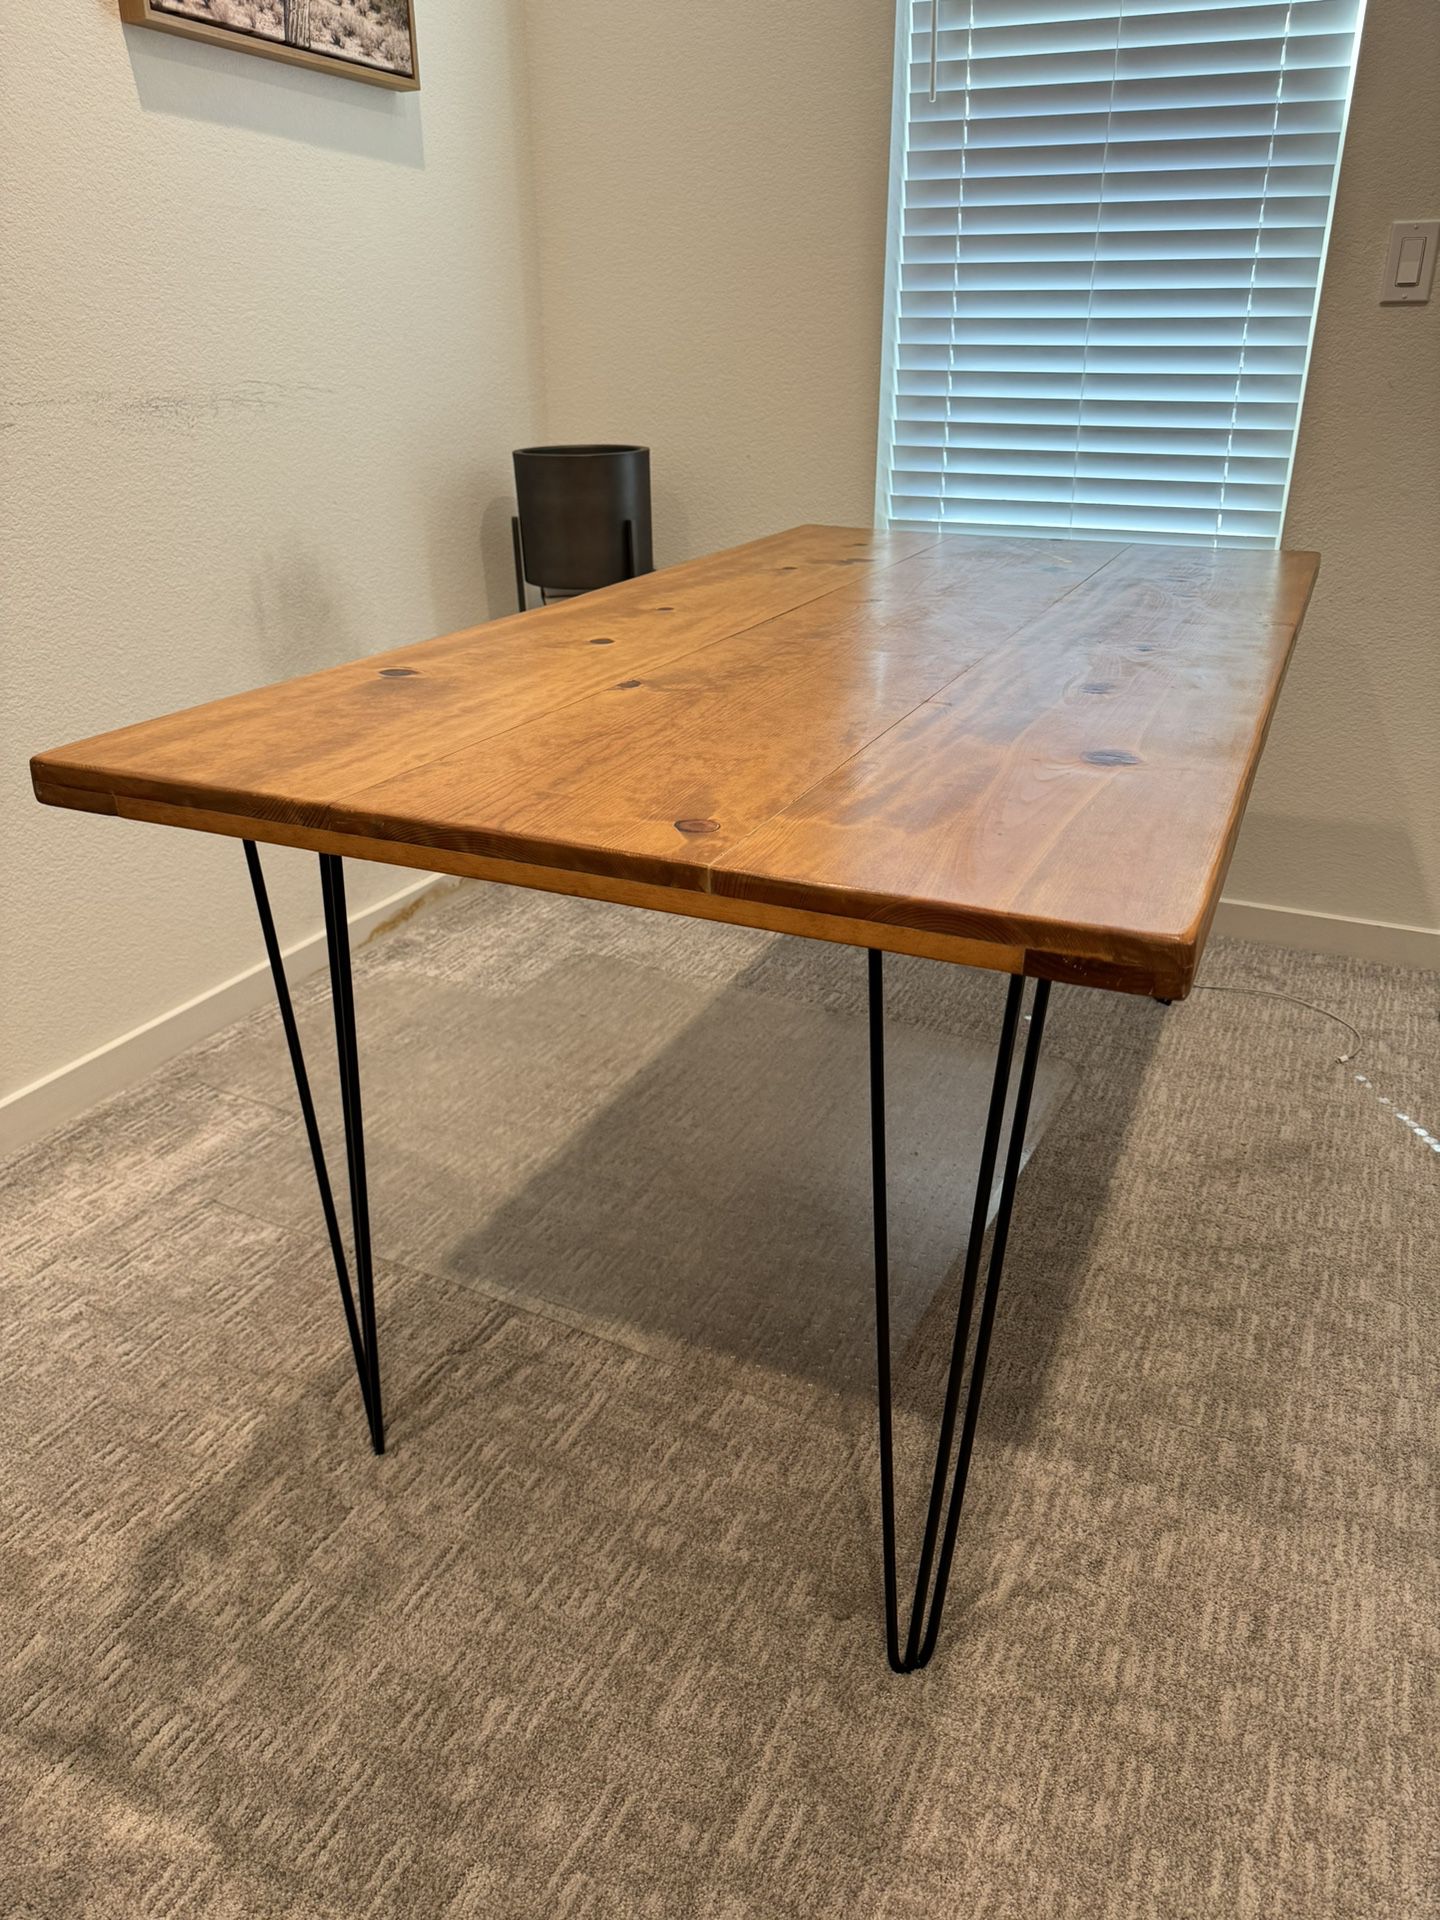 Handmade Wood Desk/Table